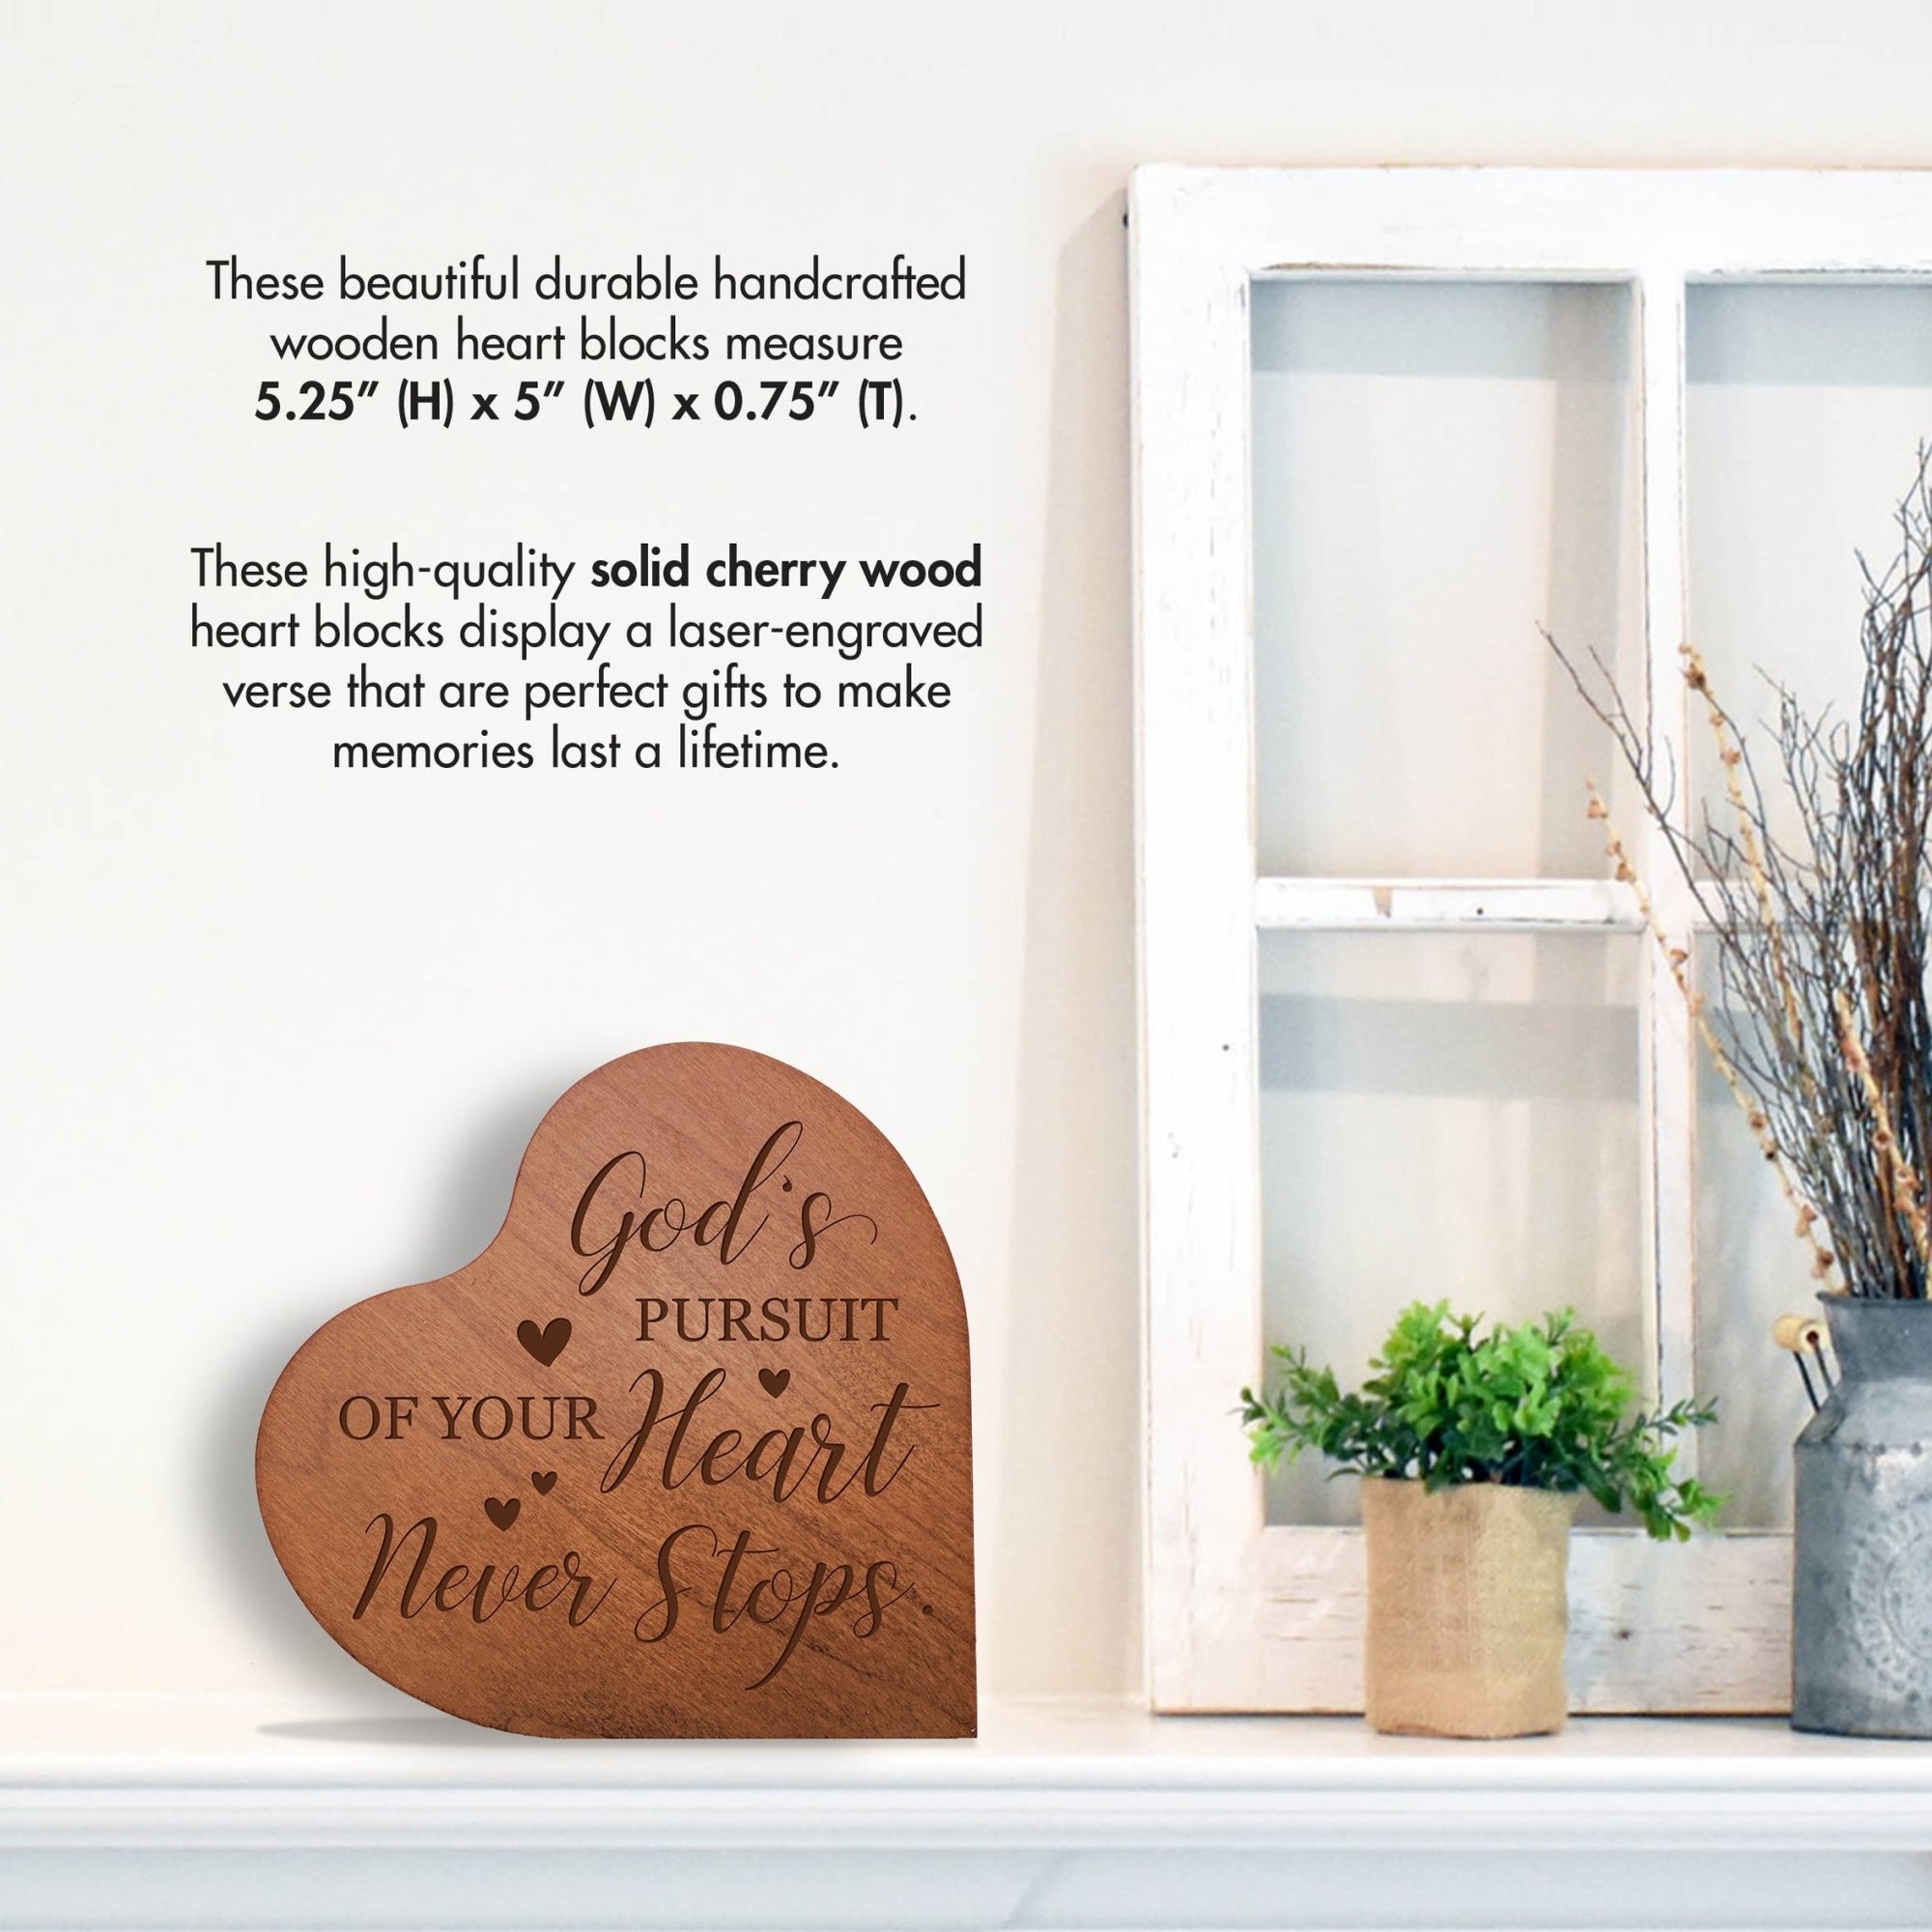 Modern Inspirational Wooden Heart Block For Home Décor - God’s Pursuit V2 - LifeSong Milestones